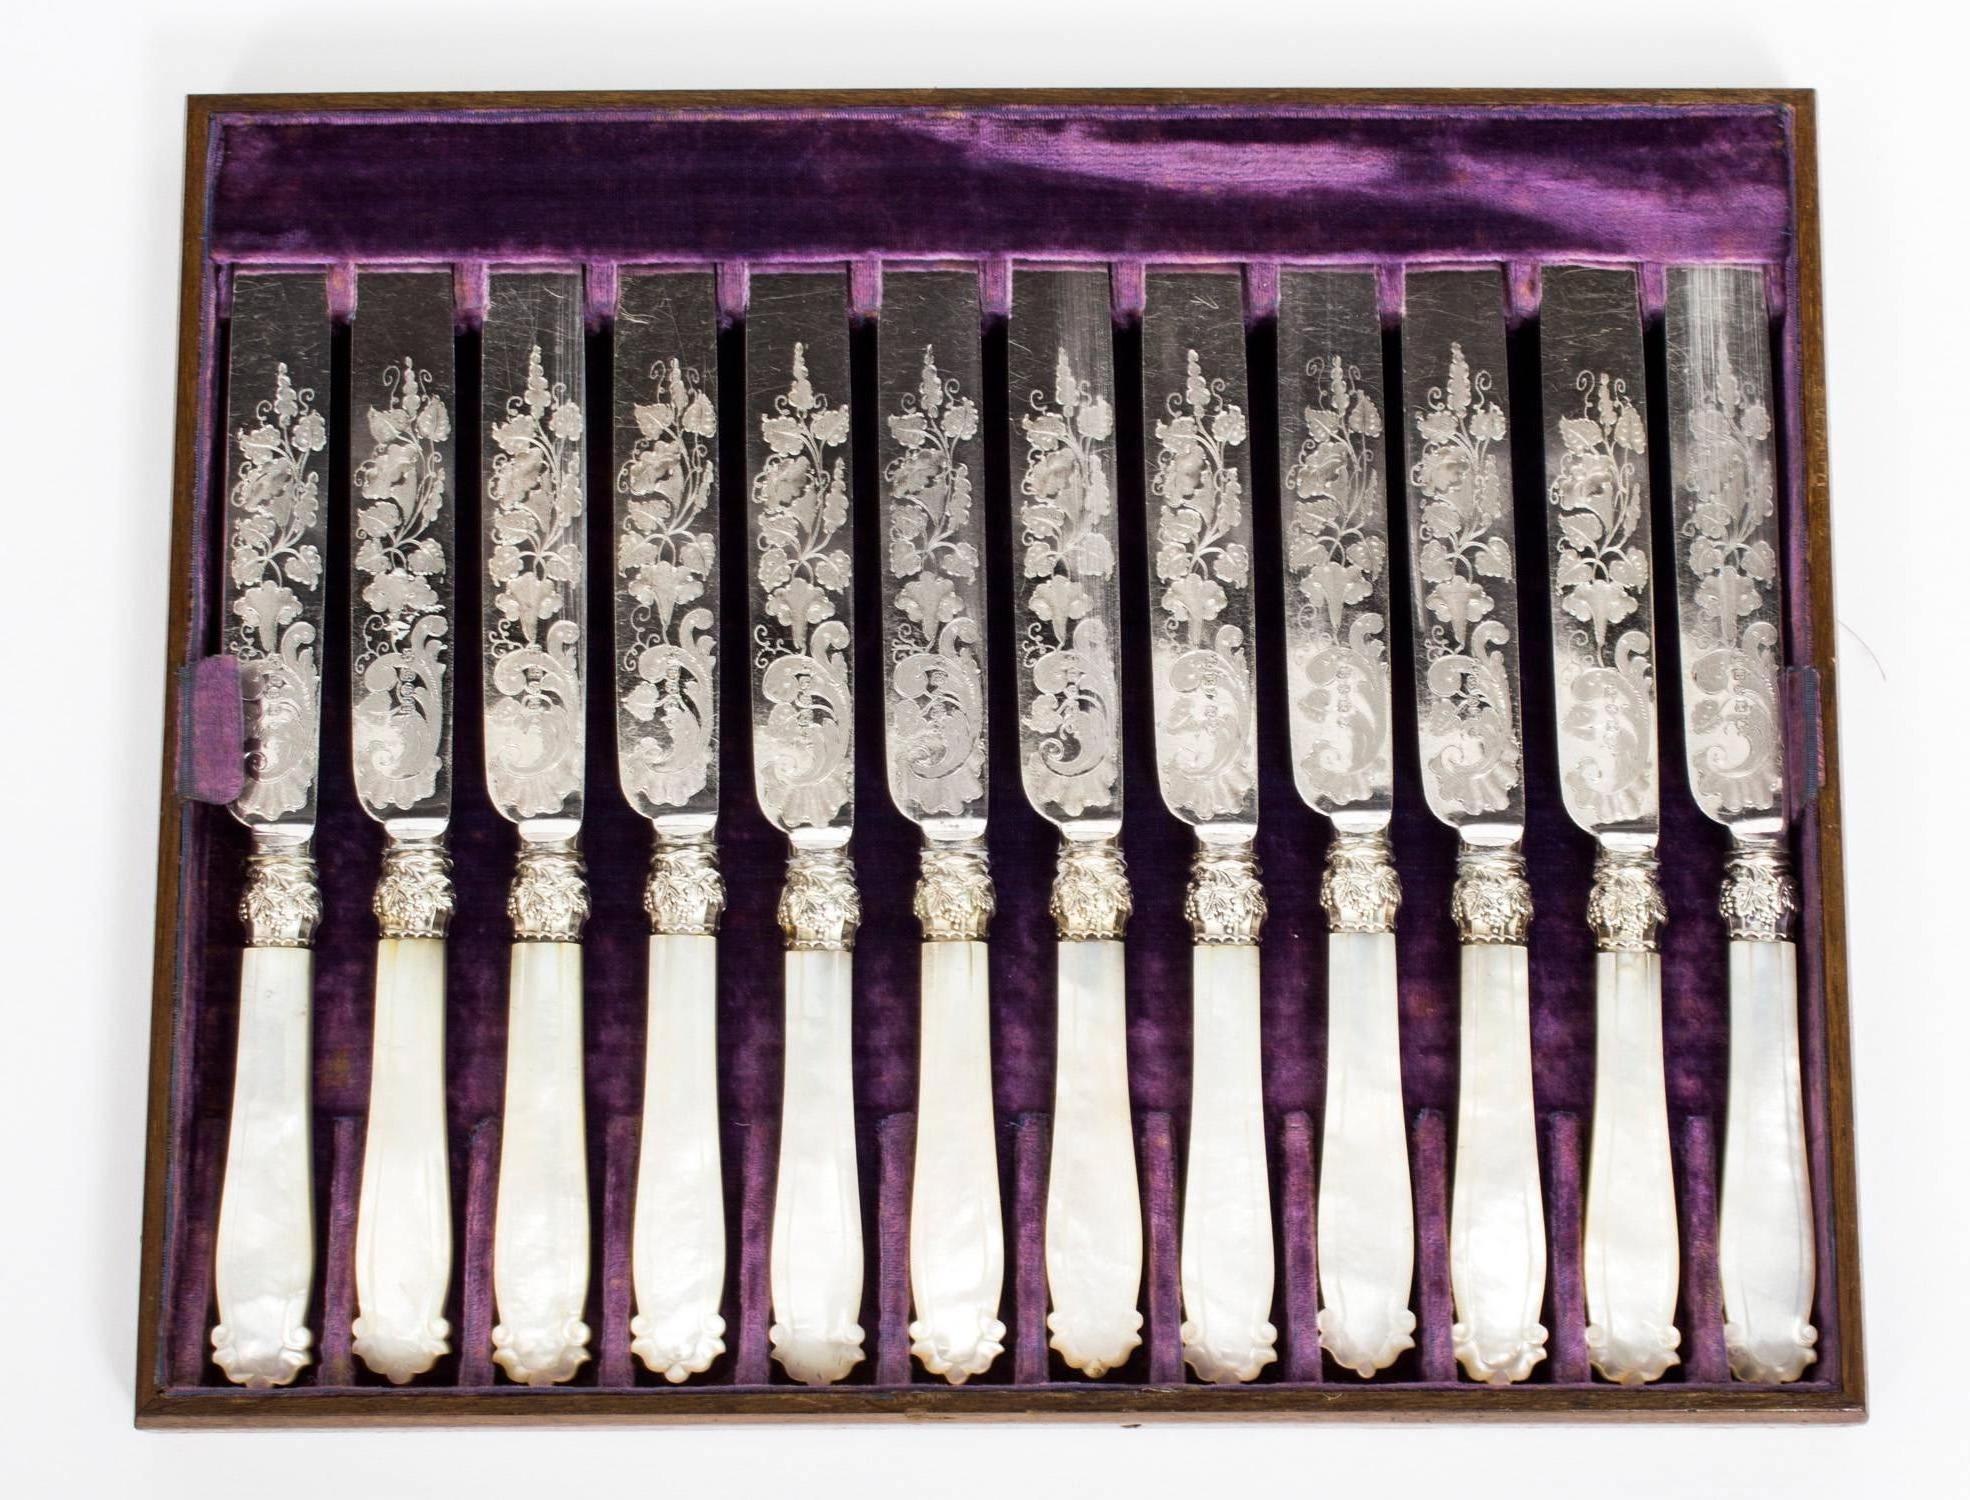 English Antique Walnut Cased Set of 18 Mother-of-pearl Dessert Knives Forks